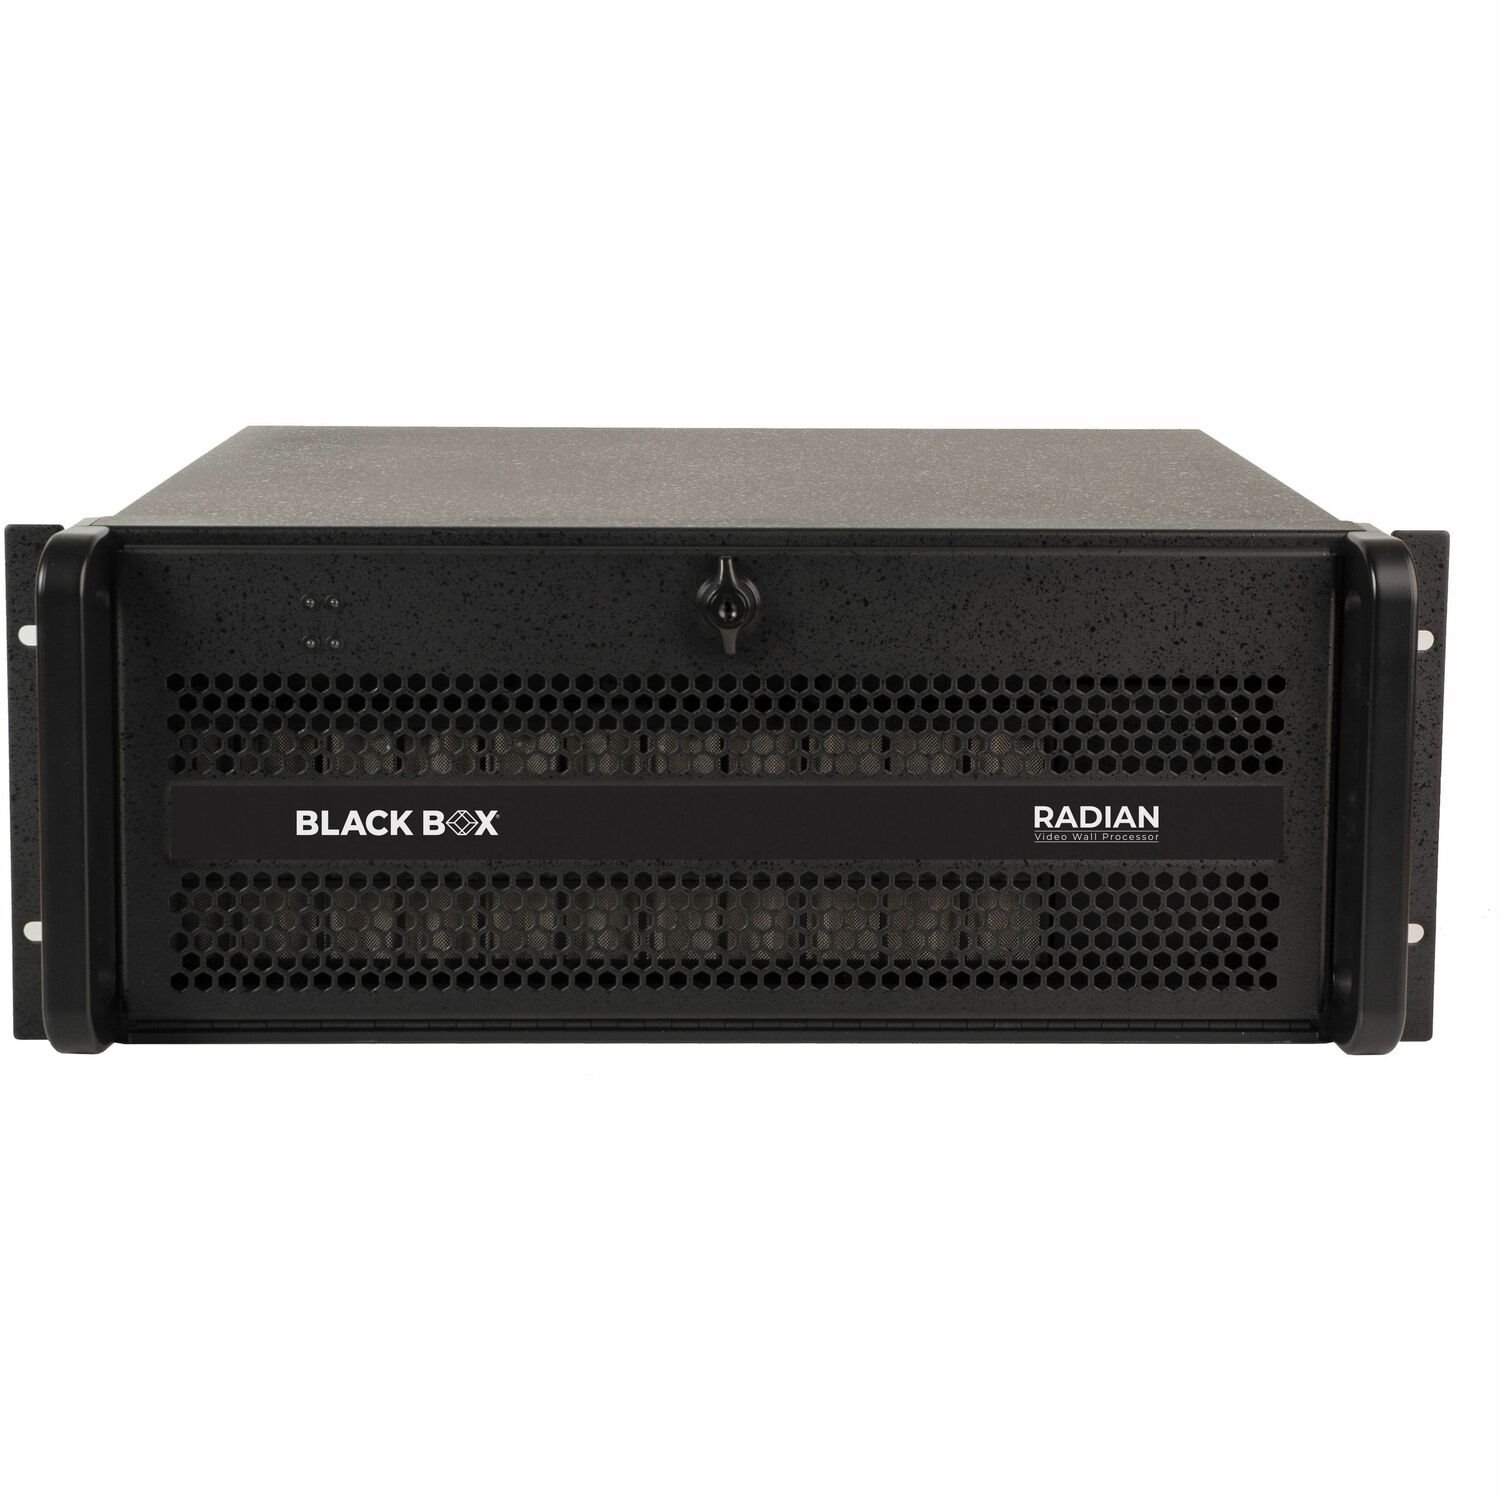 Black Box Radian VWP-1107R Video Wall Controller